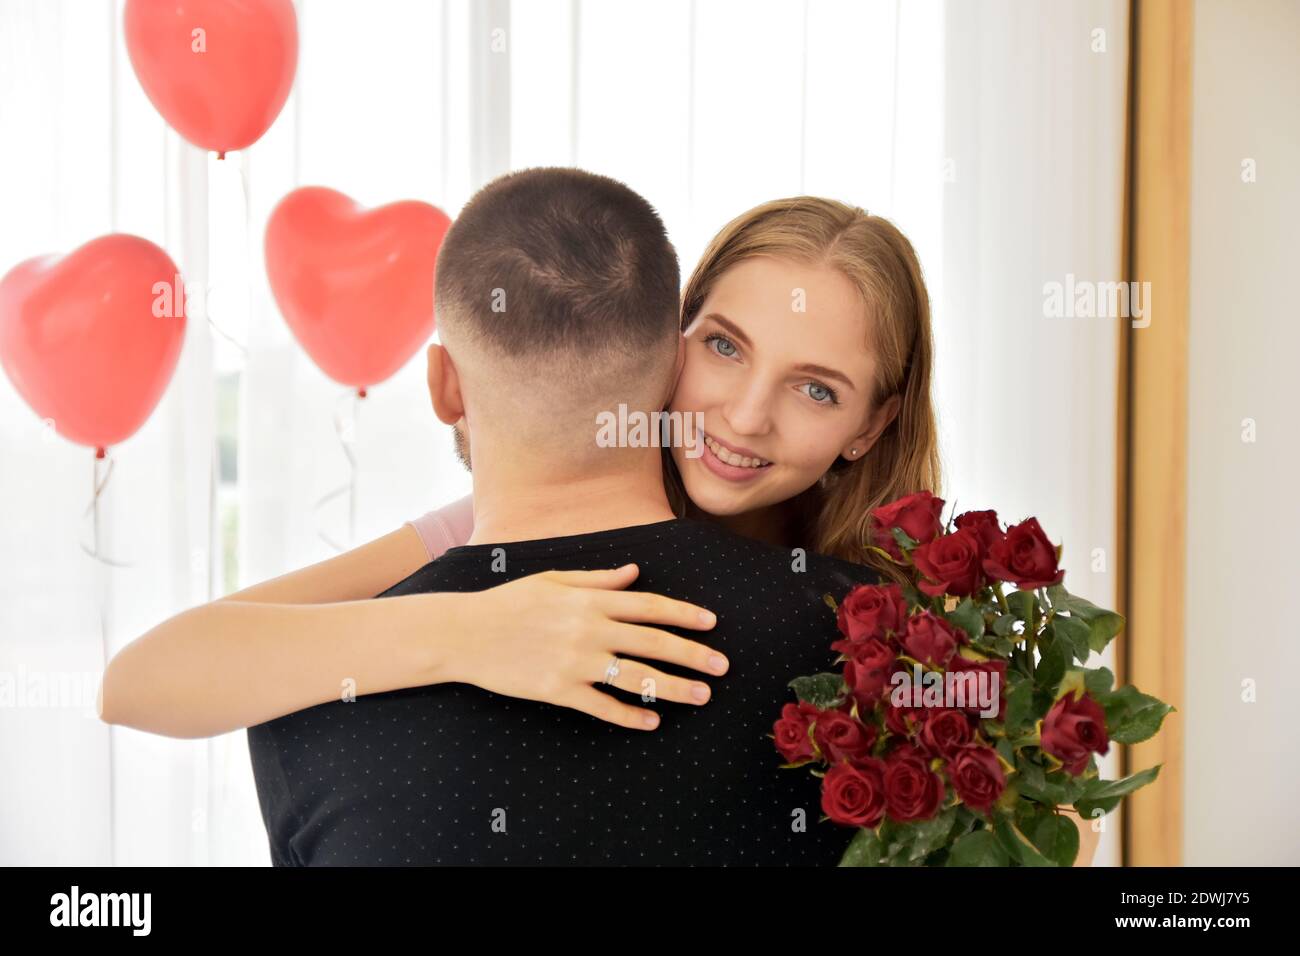 8 Romantic Photo Tips to Inspire You this Valentine's Day | Techno FAQ